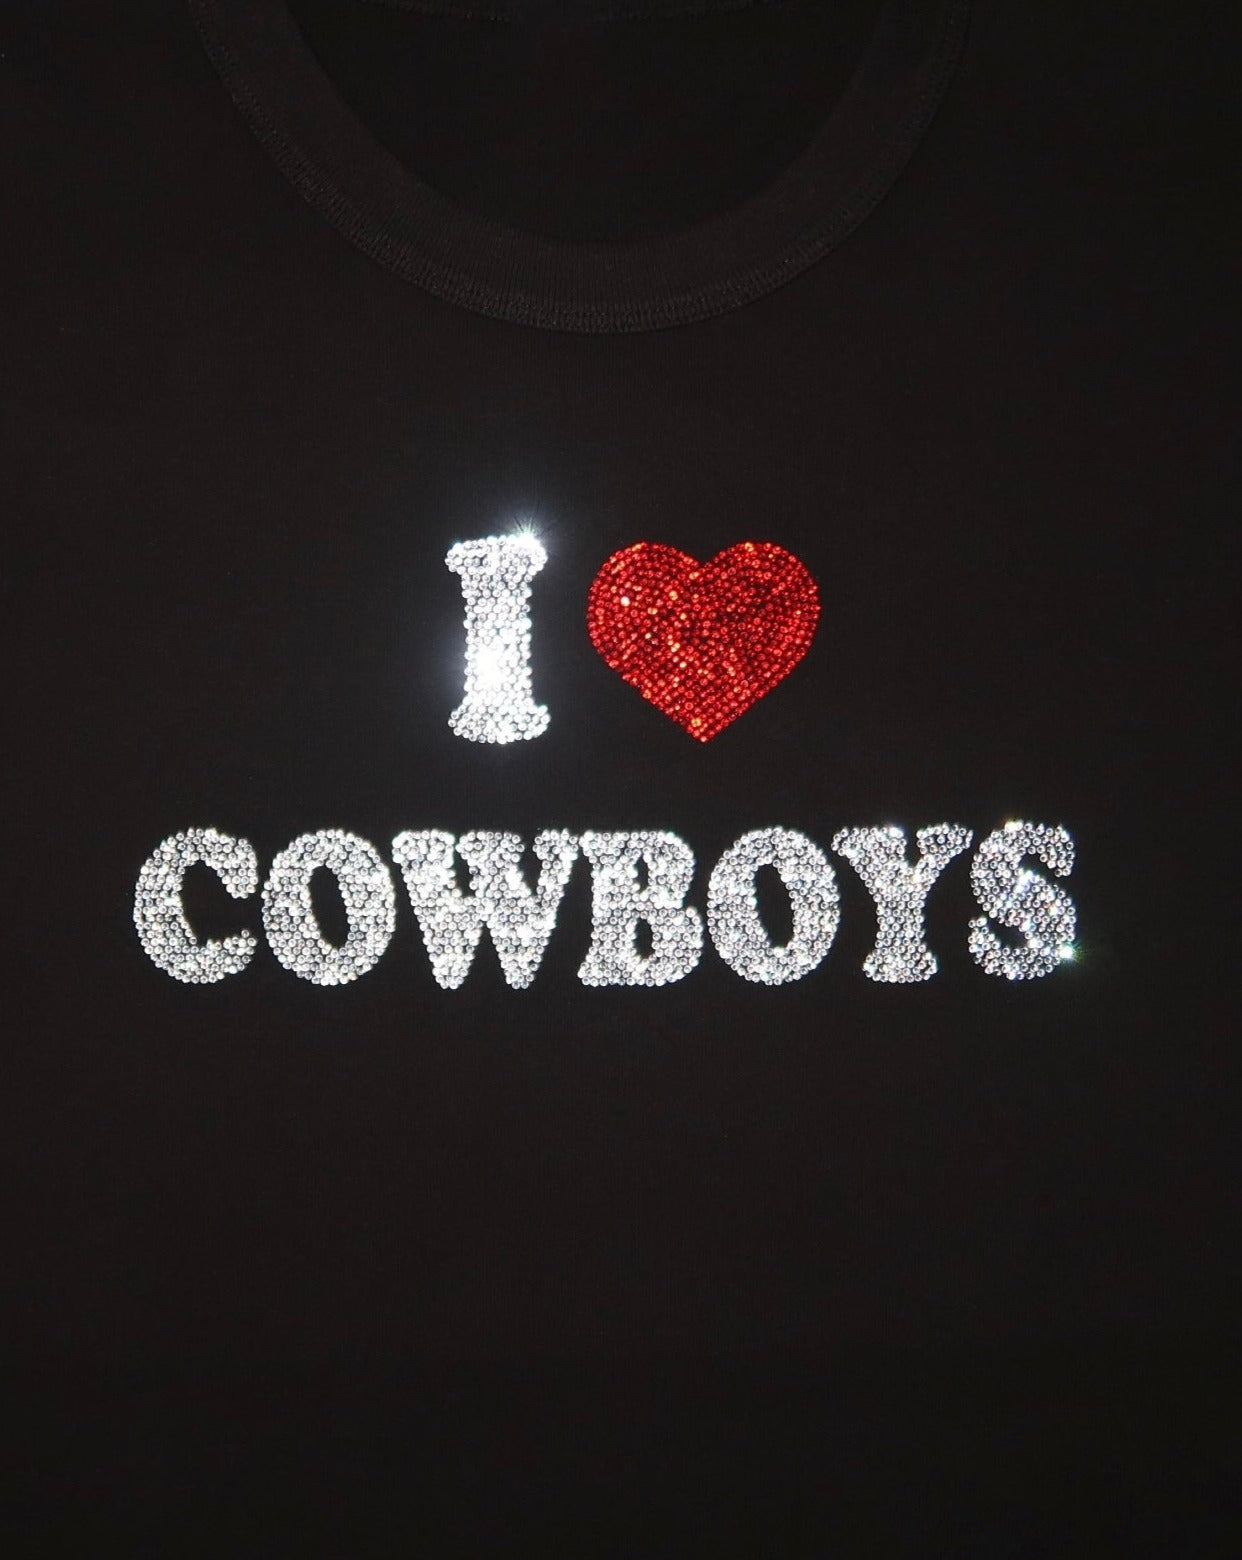 I love COWBOYS T-shirt